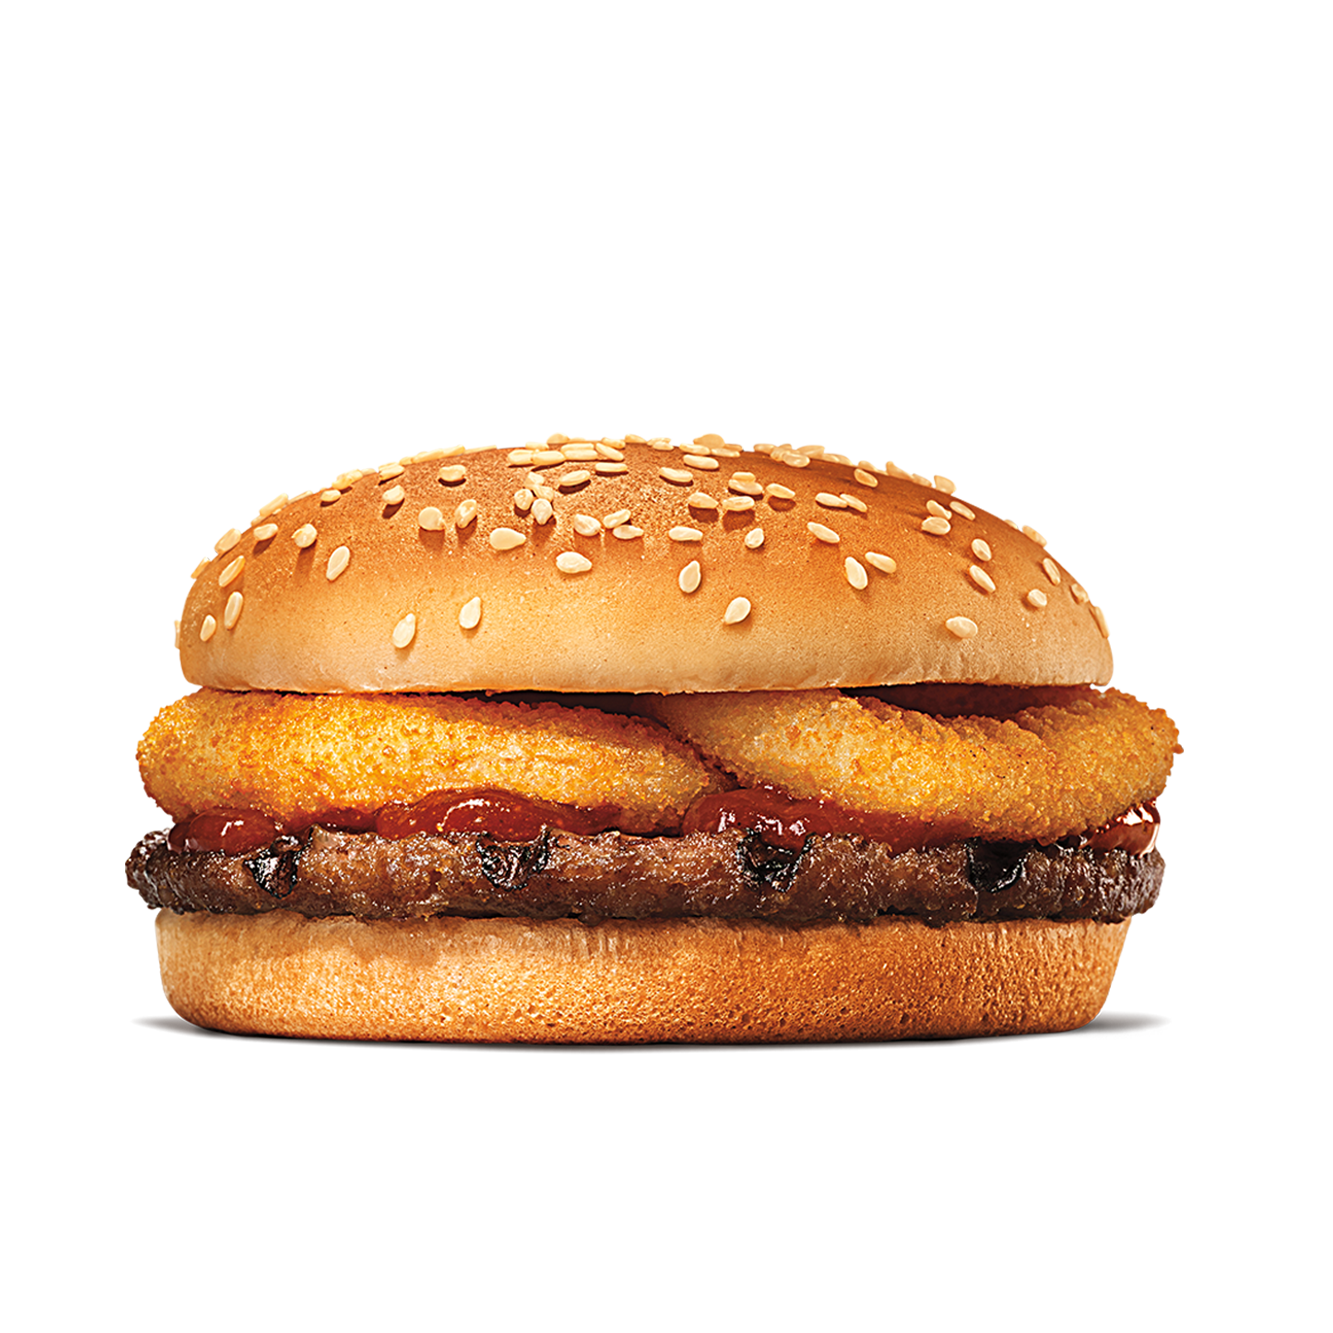 Burger King Madison Heights (248)234-6378